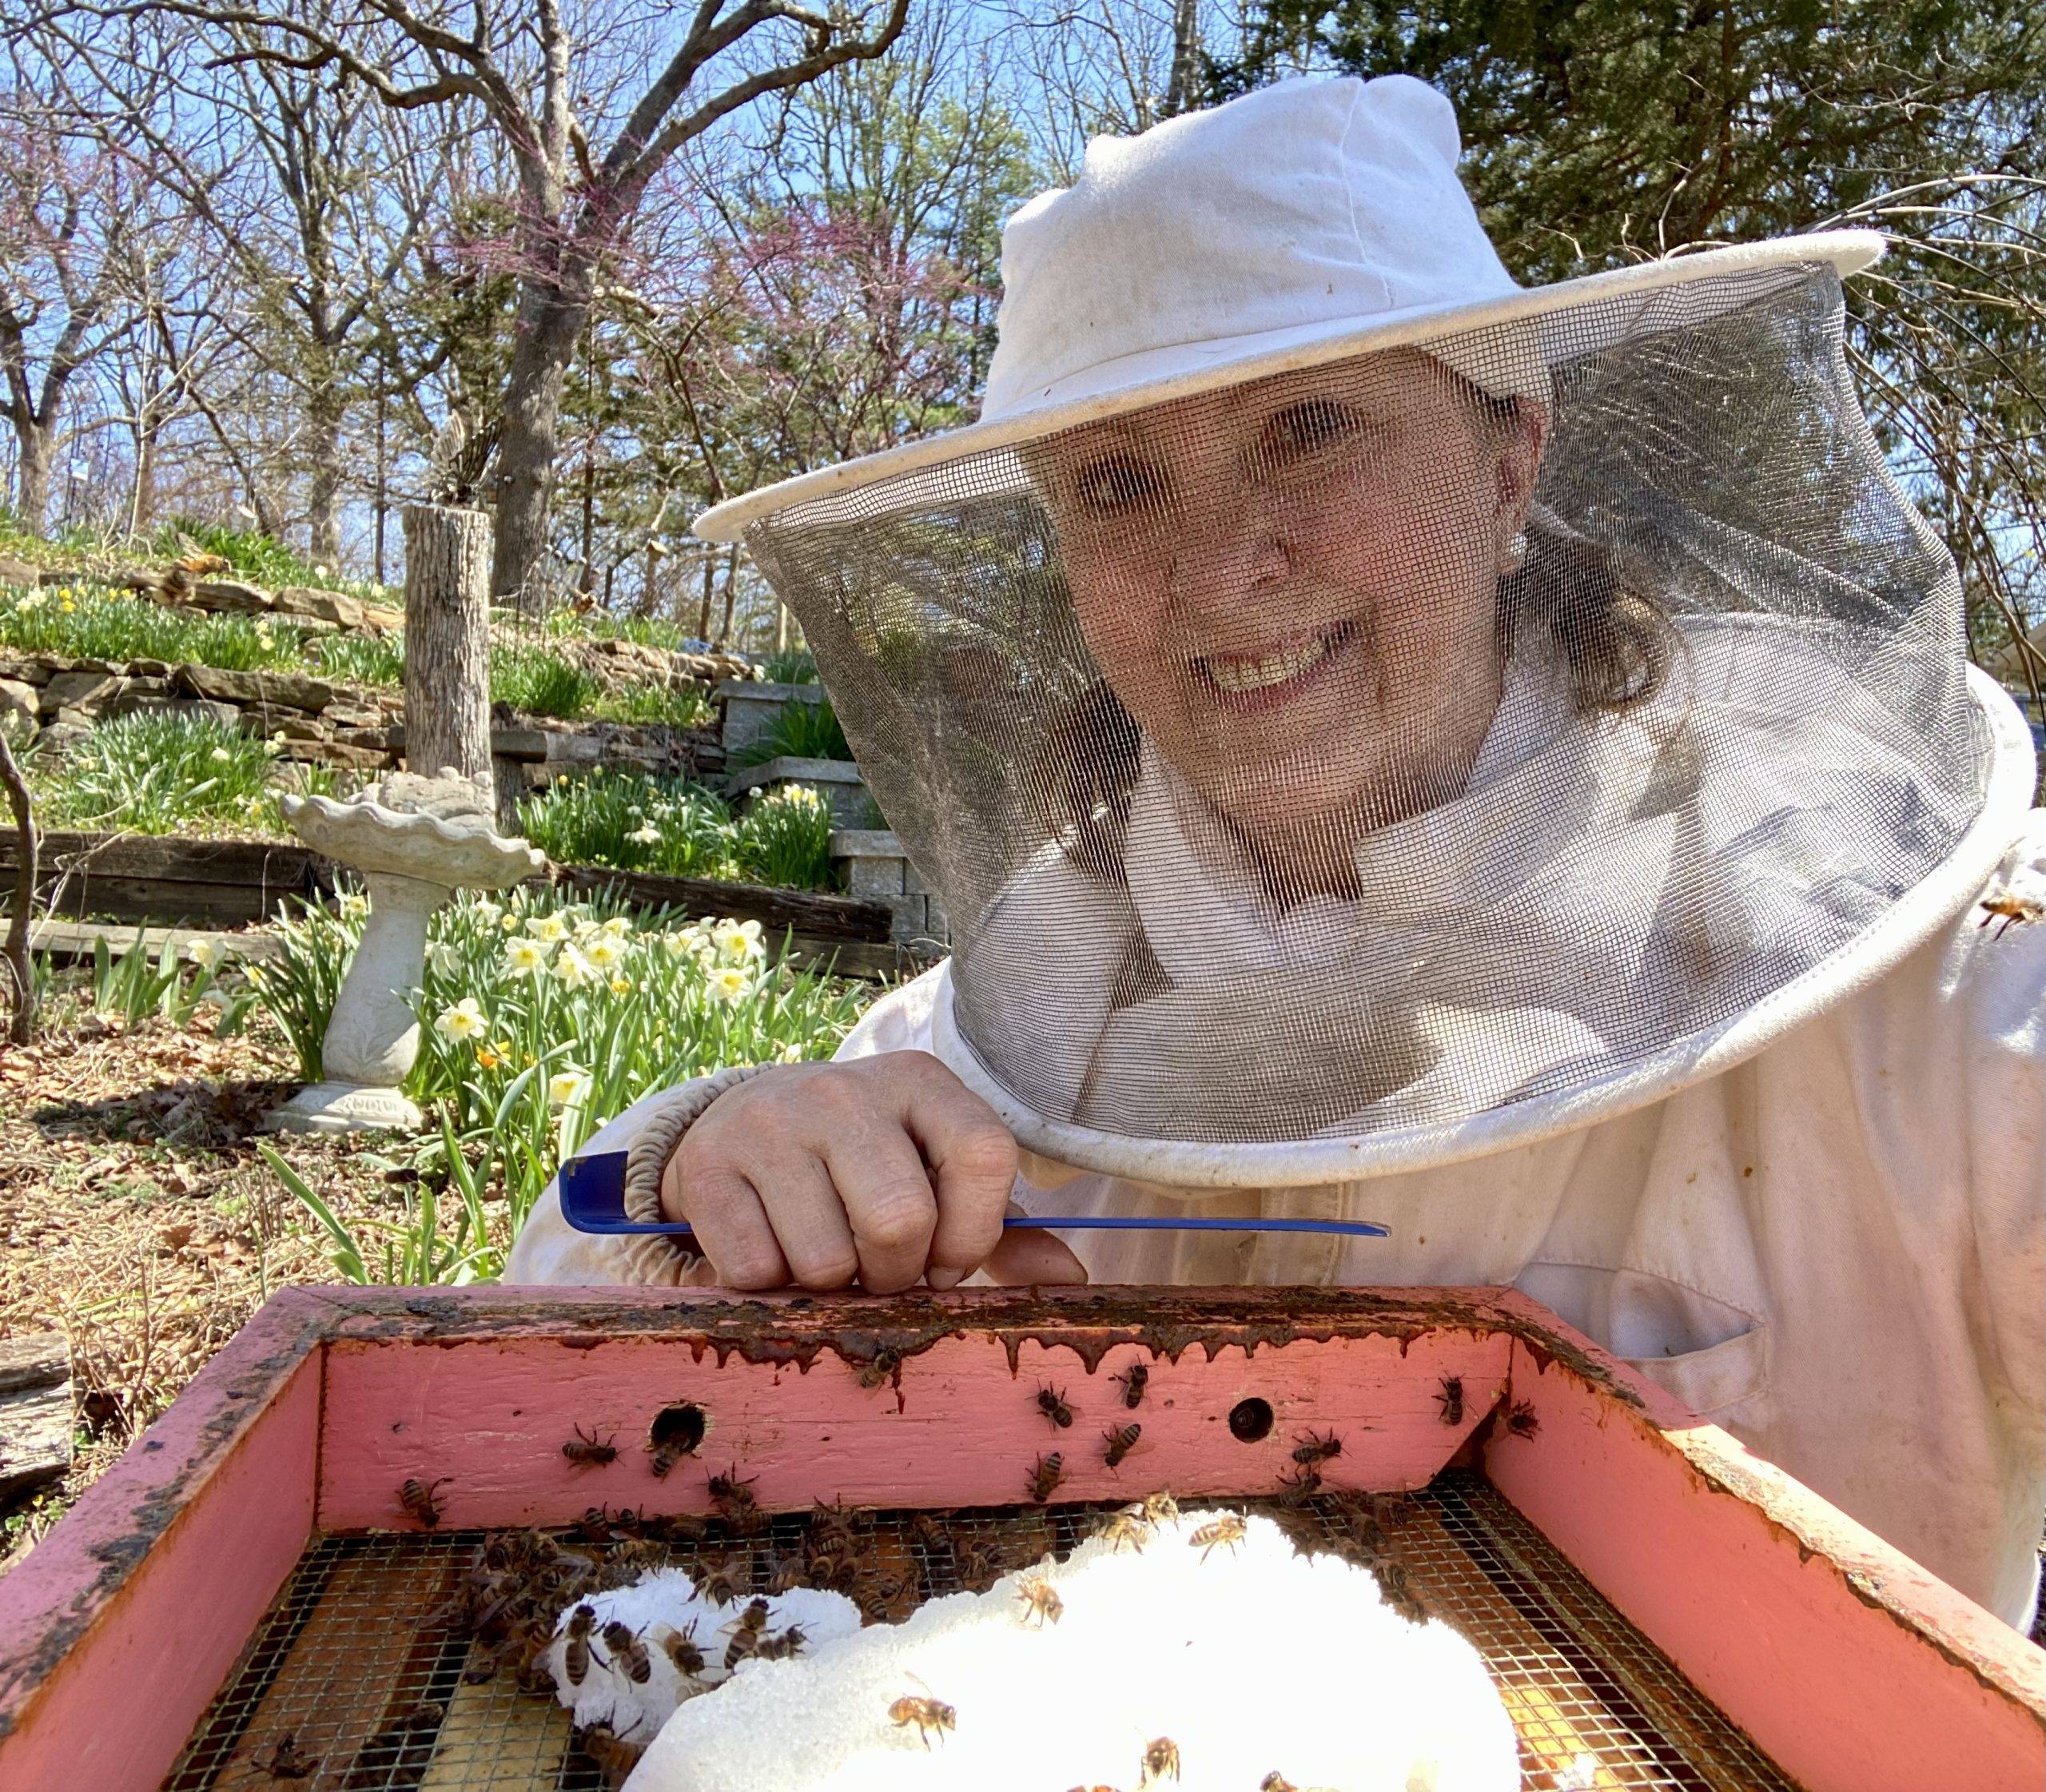 Winter supplemental feeding sugar cake in case bees run out of honey:
Image Courtesy of Charlotte Ekker Wiggins